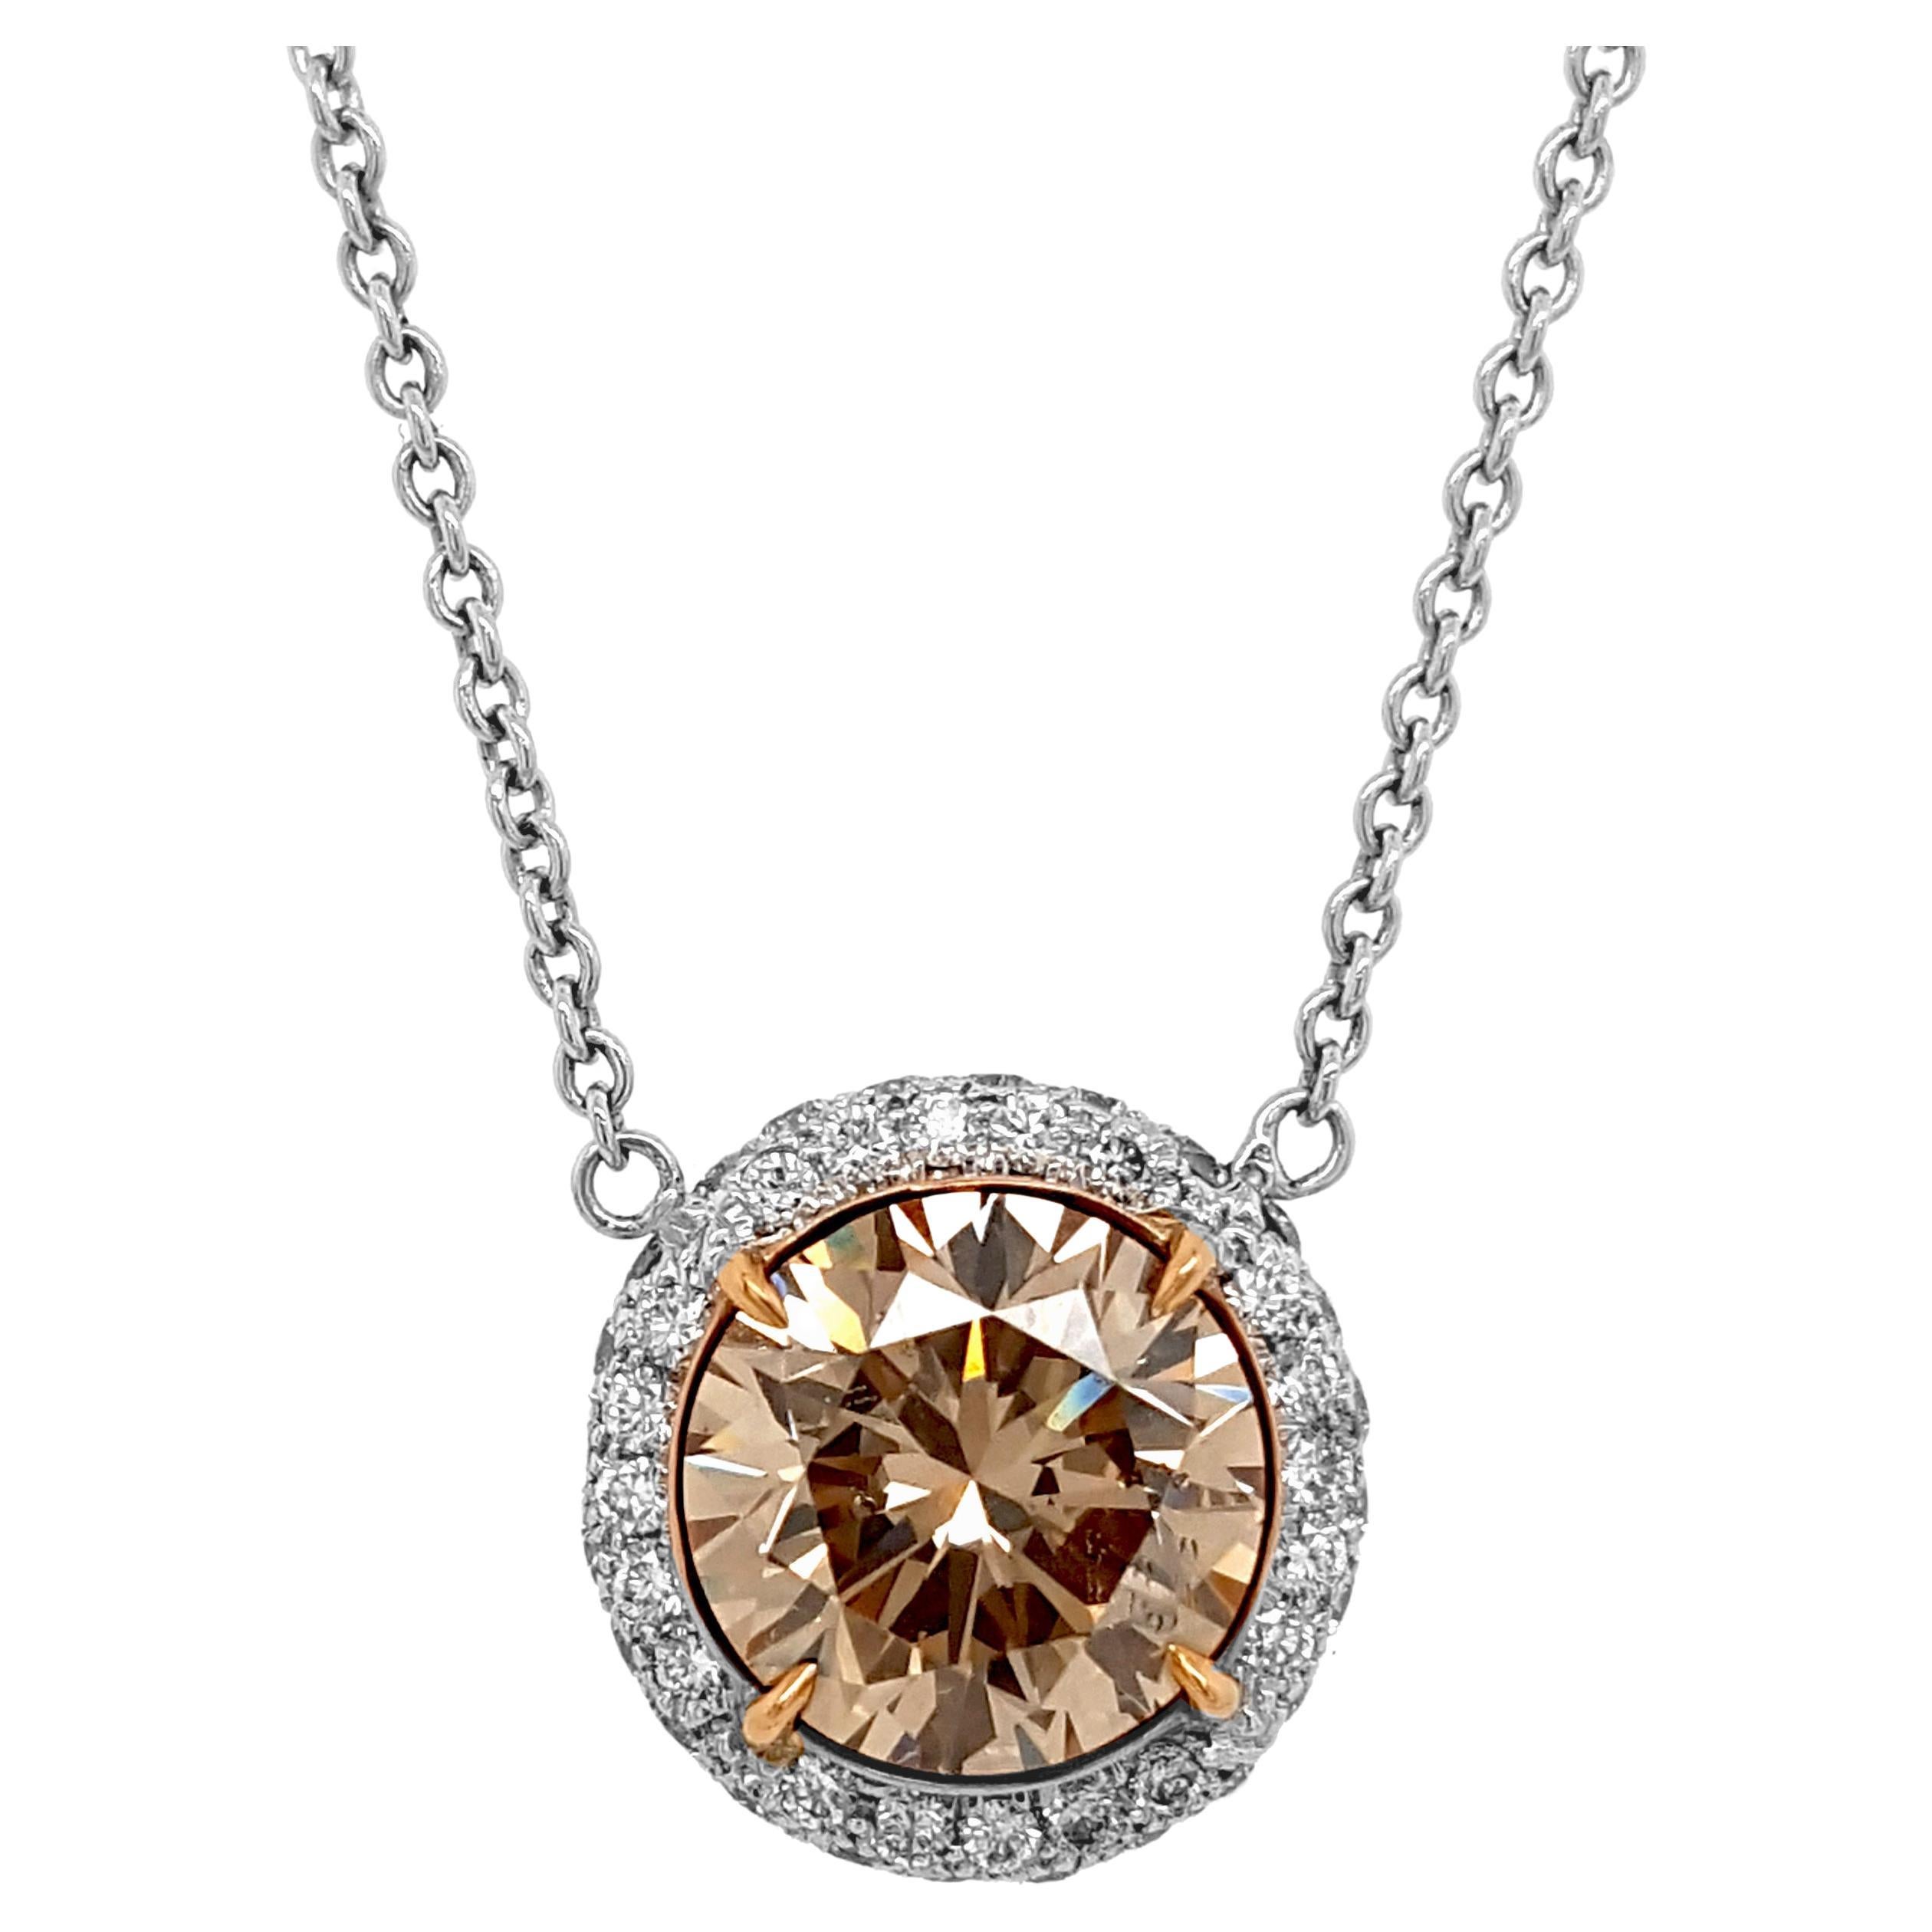 2.53 Carat Round Brilliant Brown Diamond Halo Pendant Necklace, Set in 18K Gold.